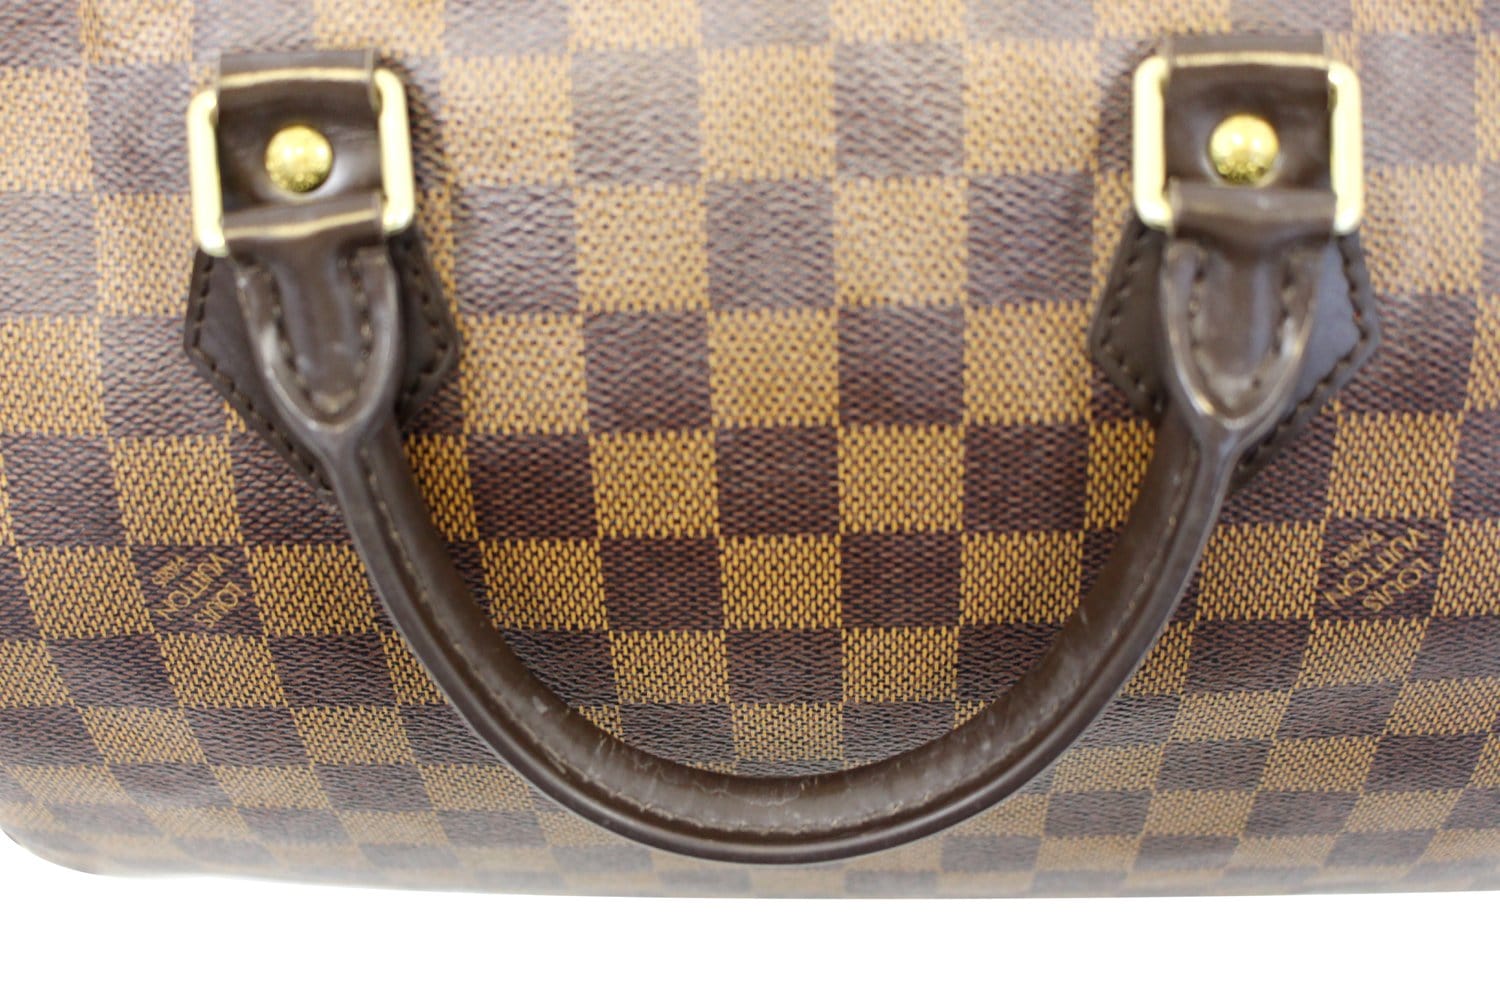 Louis Vuitton Speedy 30 Damier Ebene Shoulder Bag